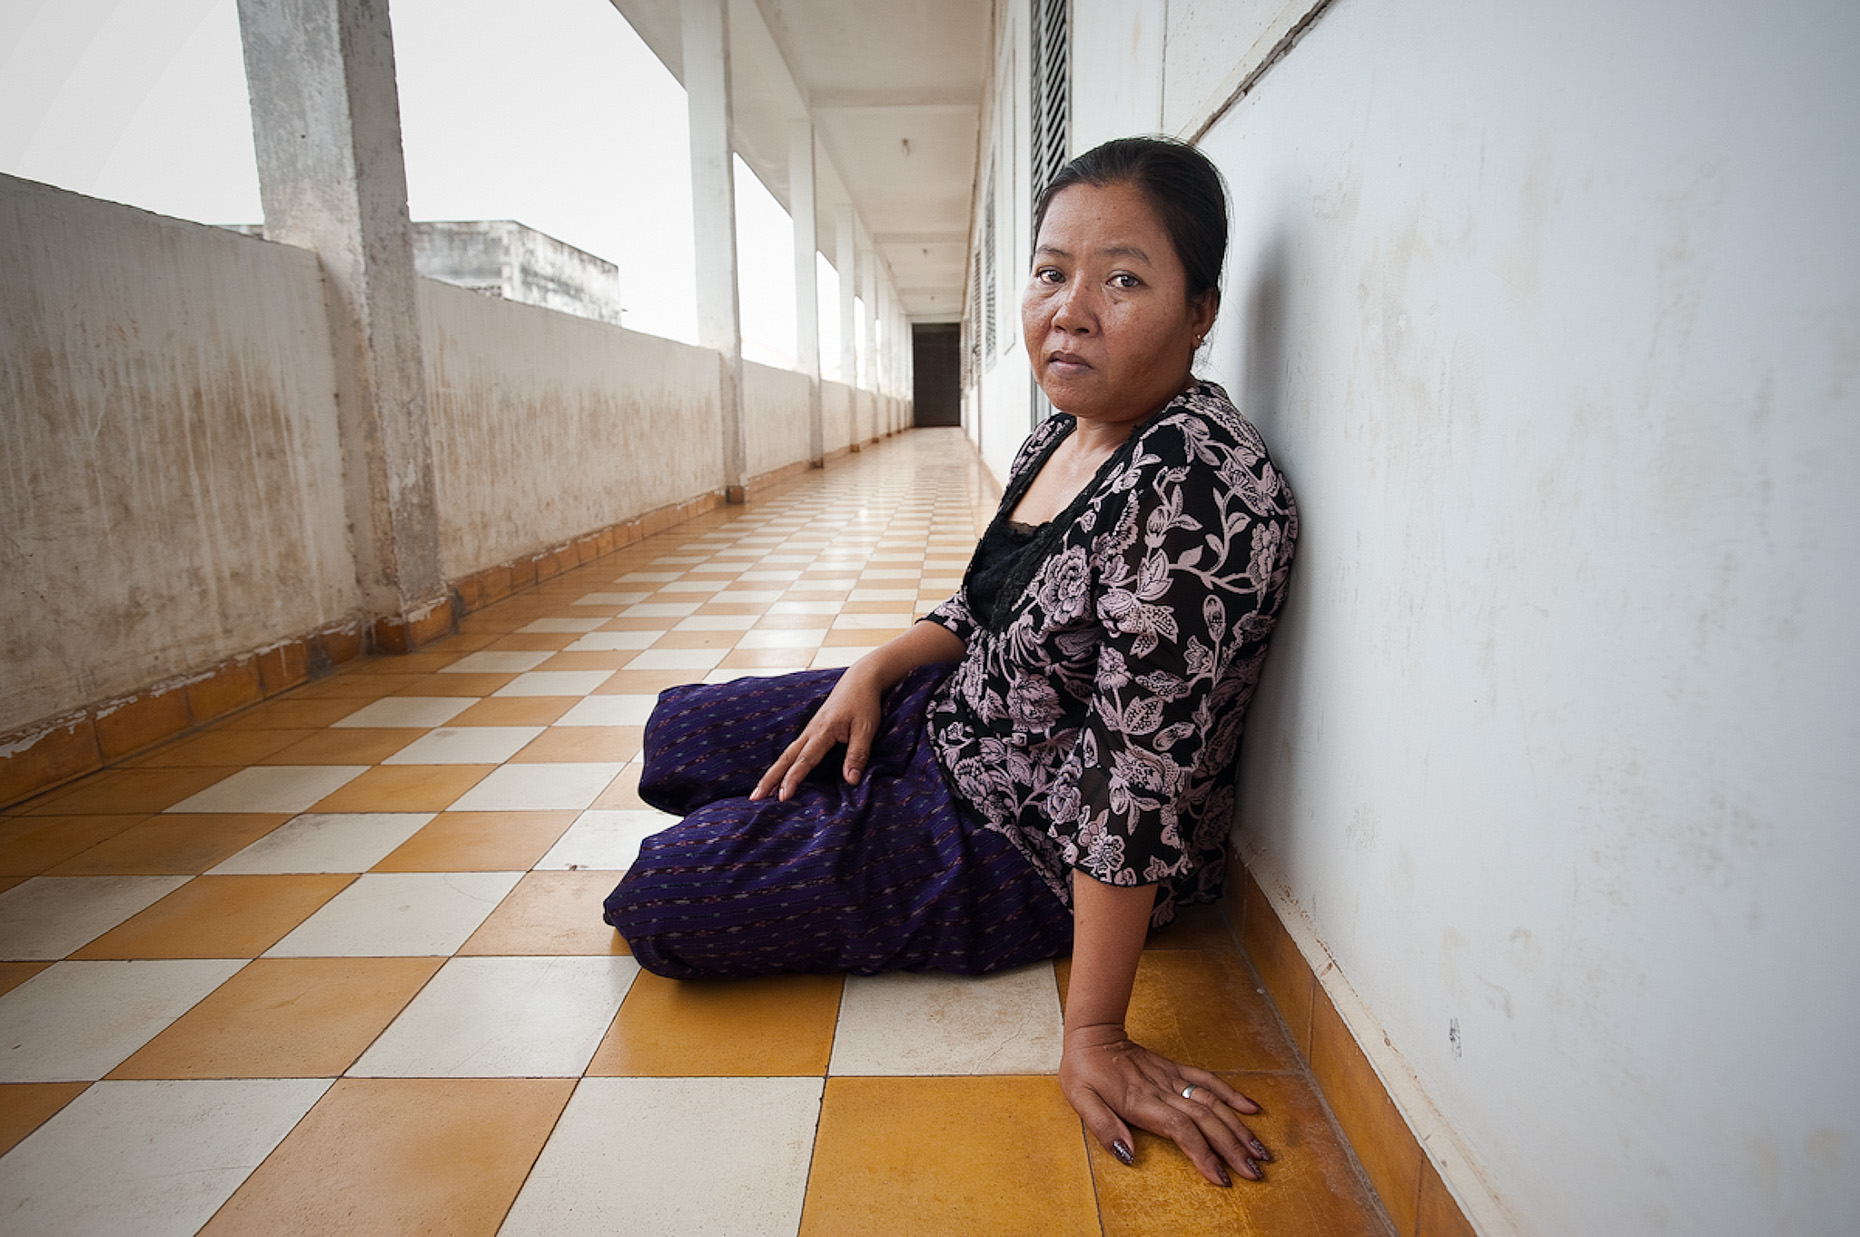 Khmer Rouge survivor Hong Savath